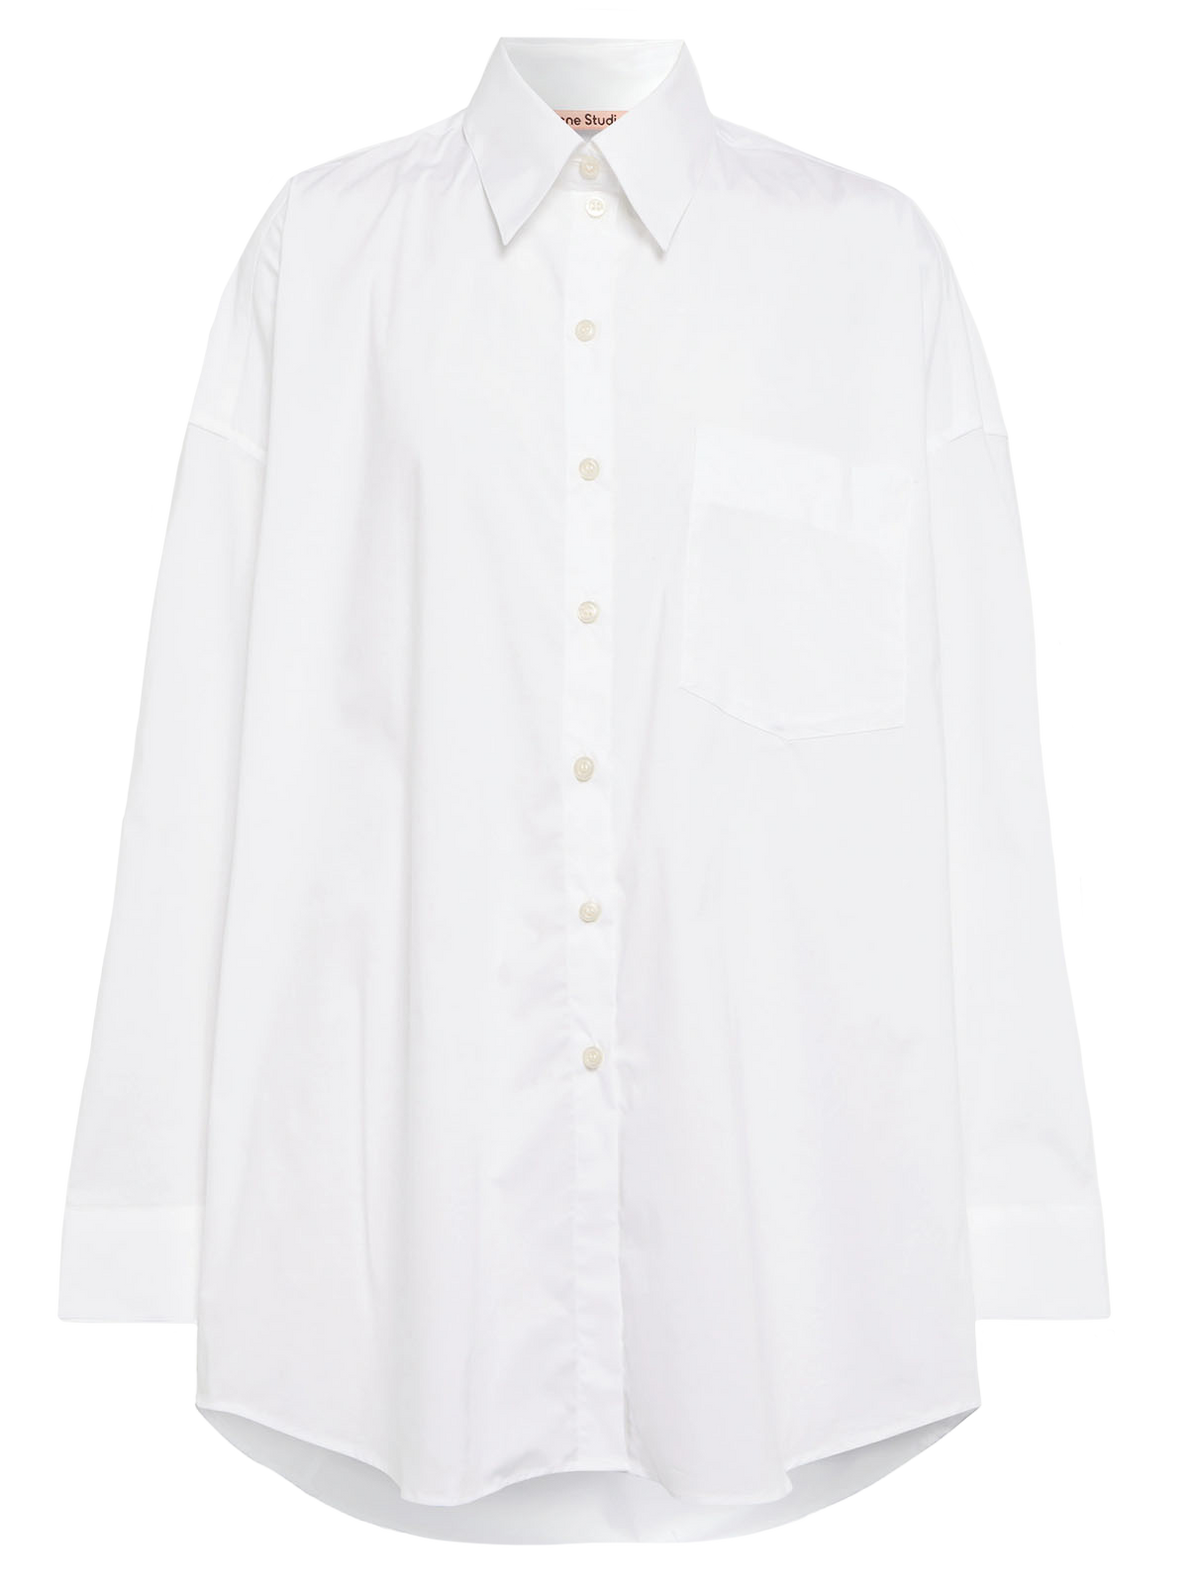 Acne Studios - Button-up shirt - White